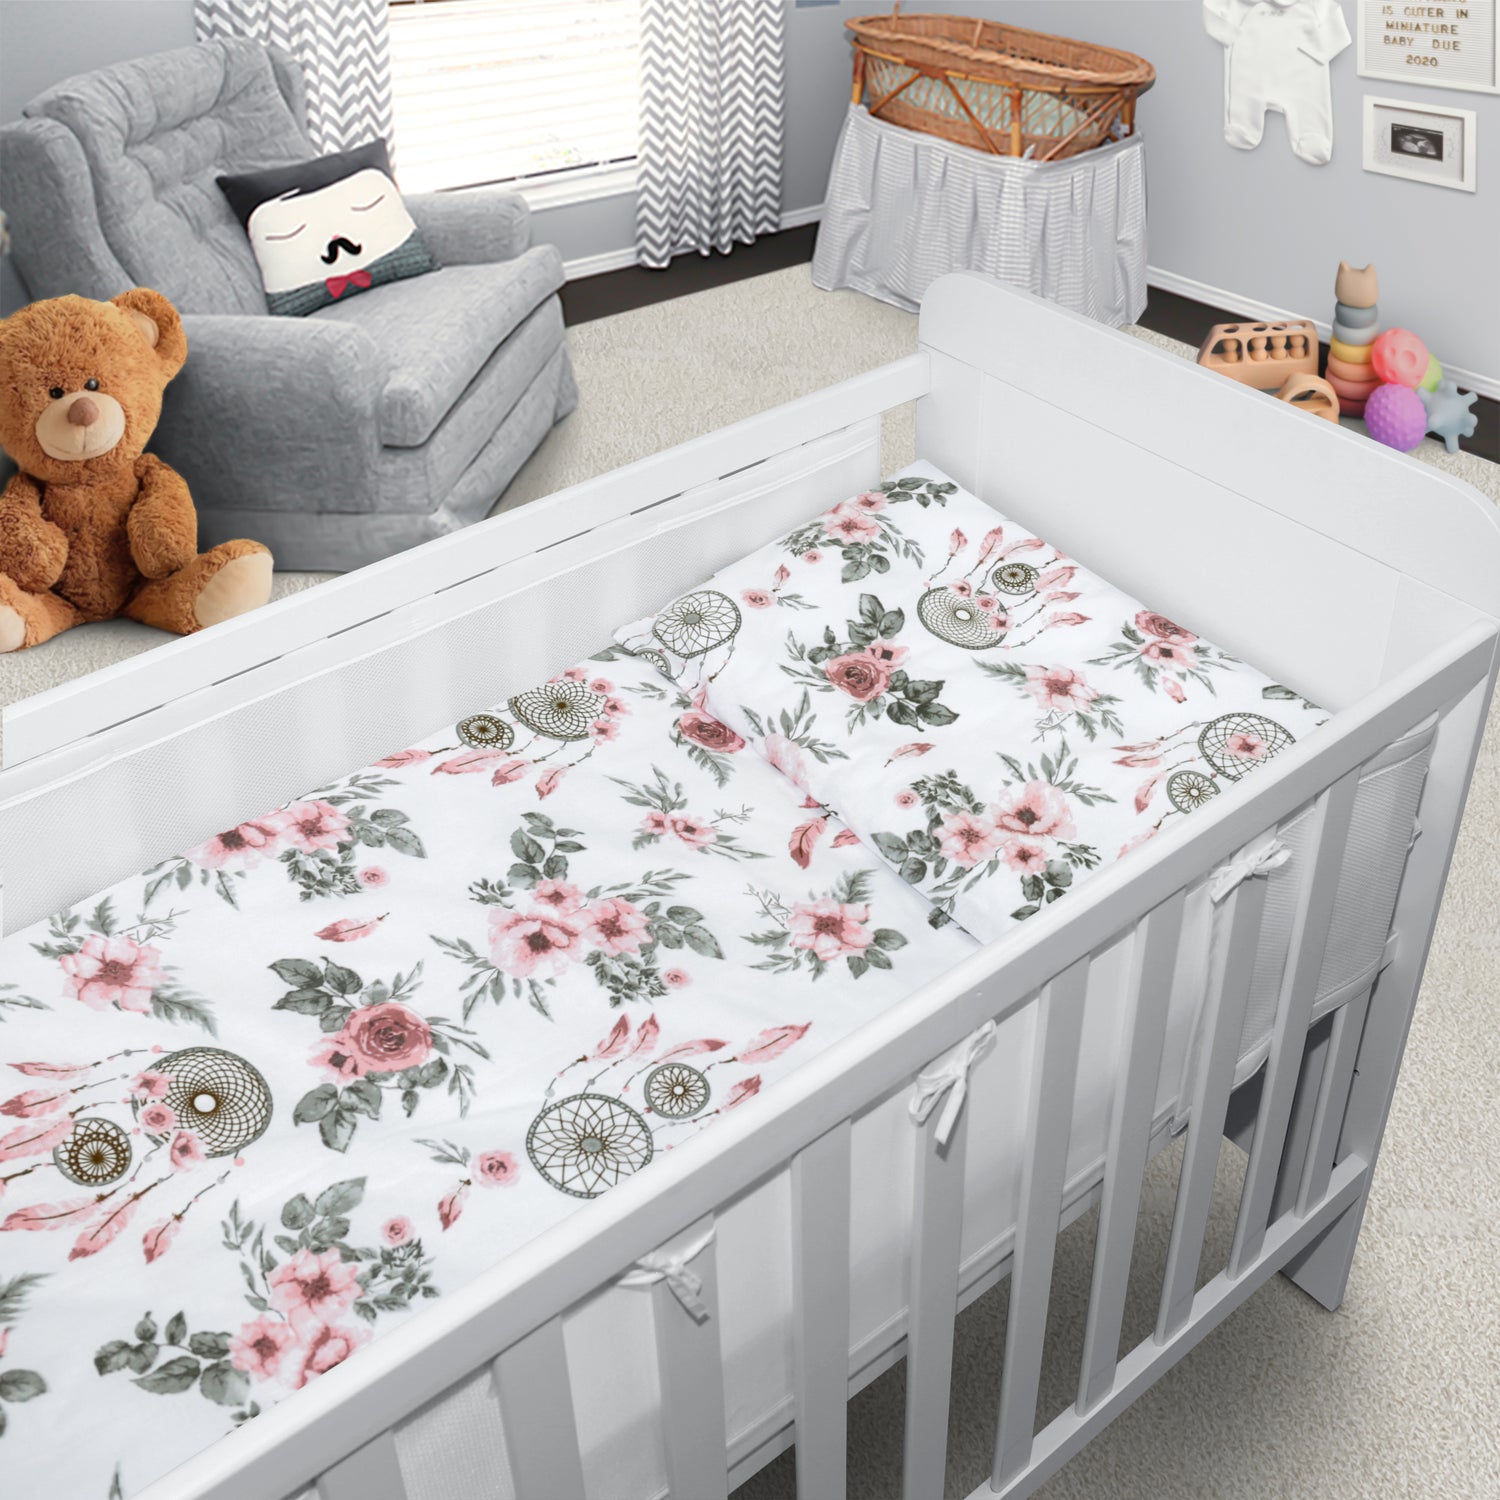 Baby Cot Bedding Set 3Pc Fit Cot bed 140x70 Dream Catcher Peach